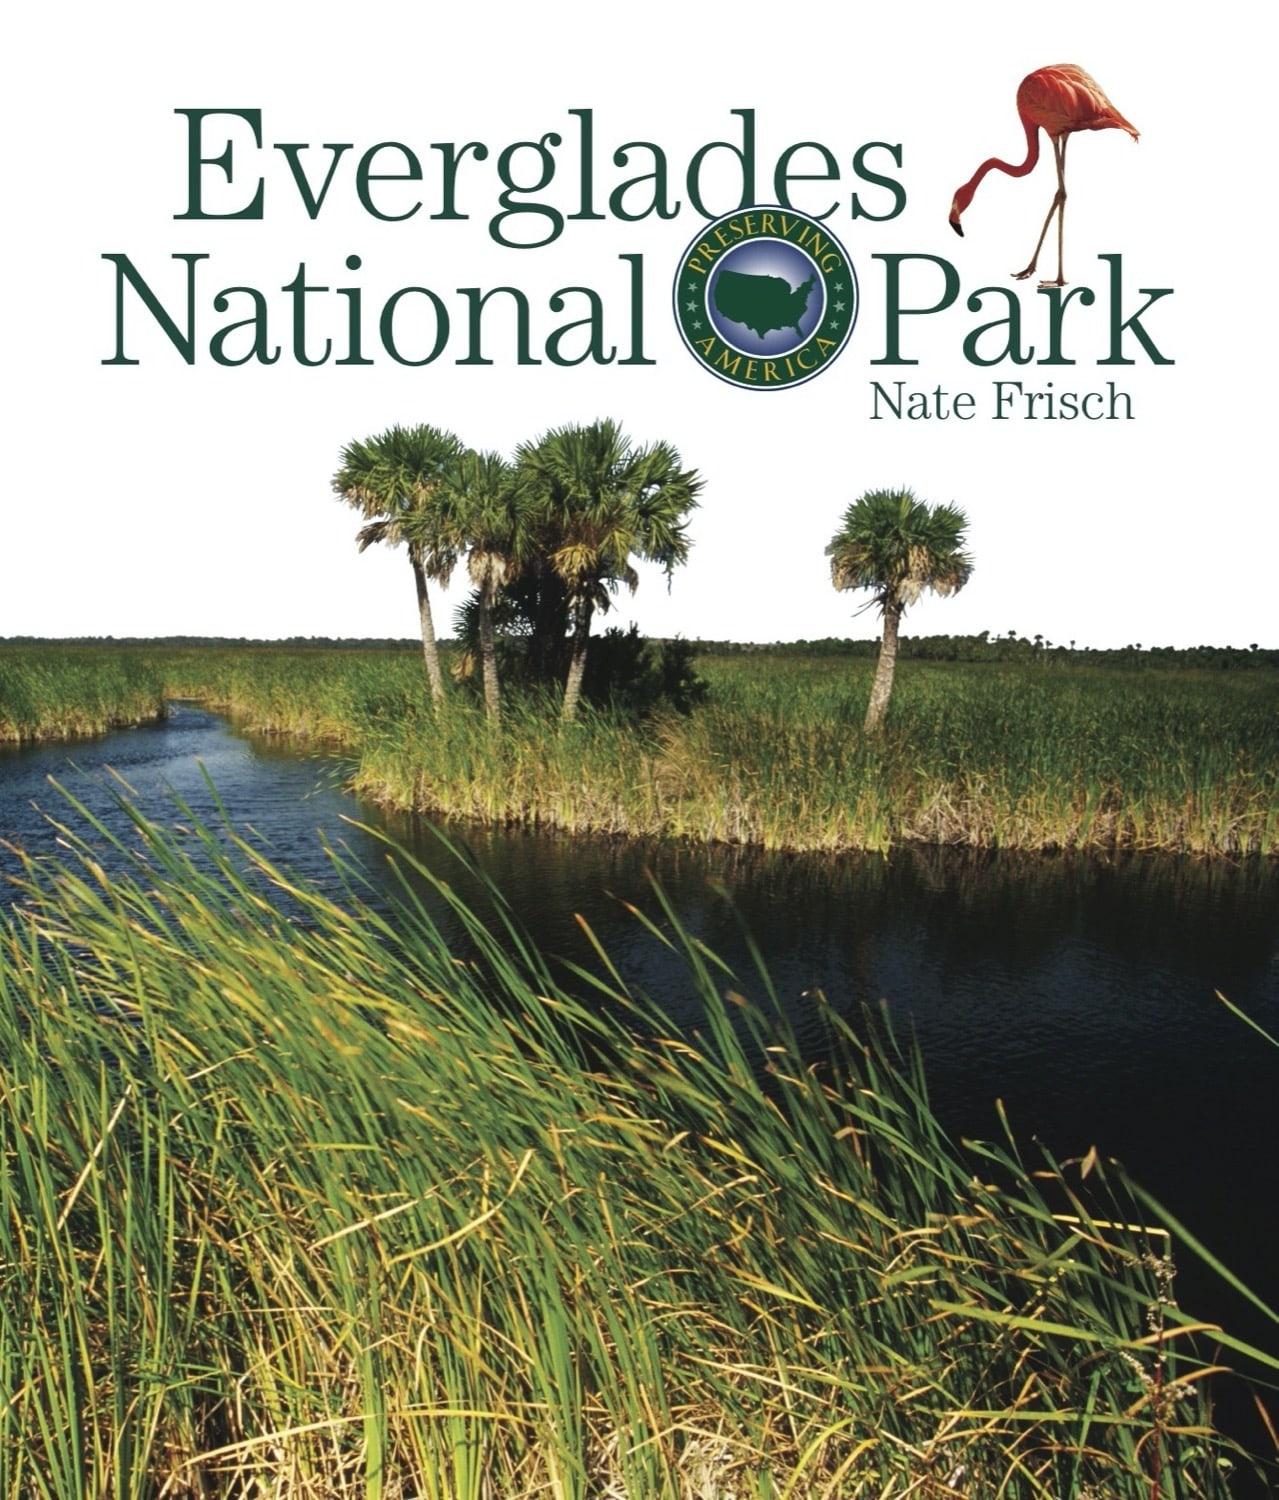 Amerika bewahren: Everglades-Nationalpark